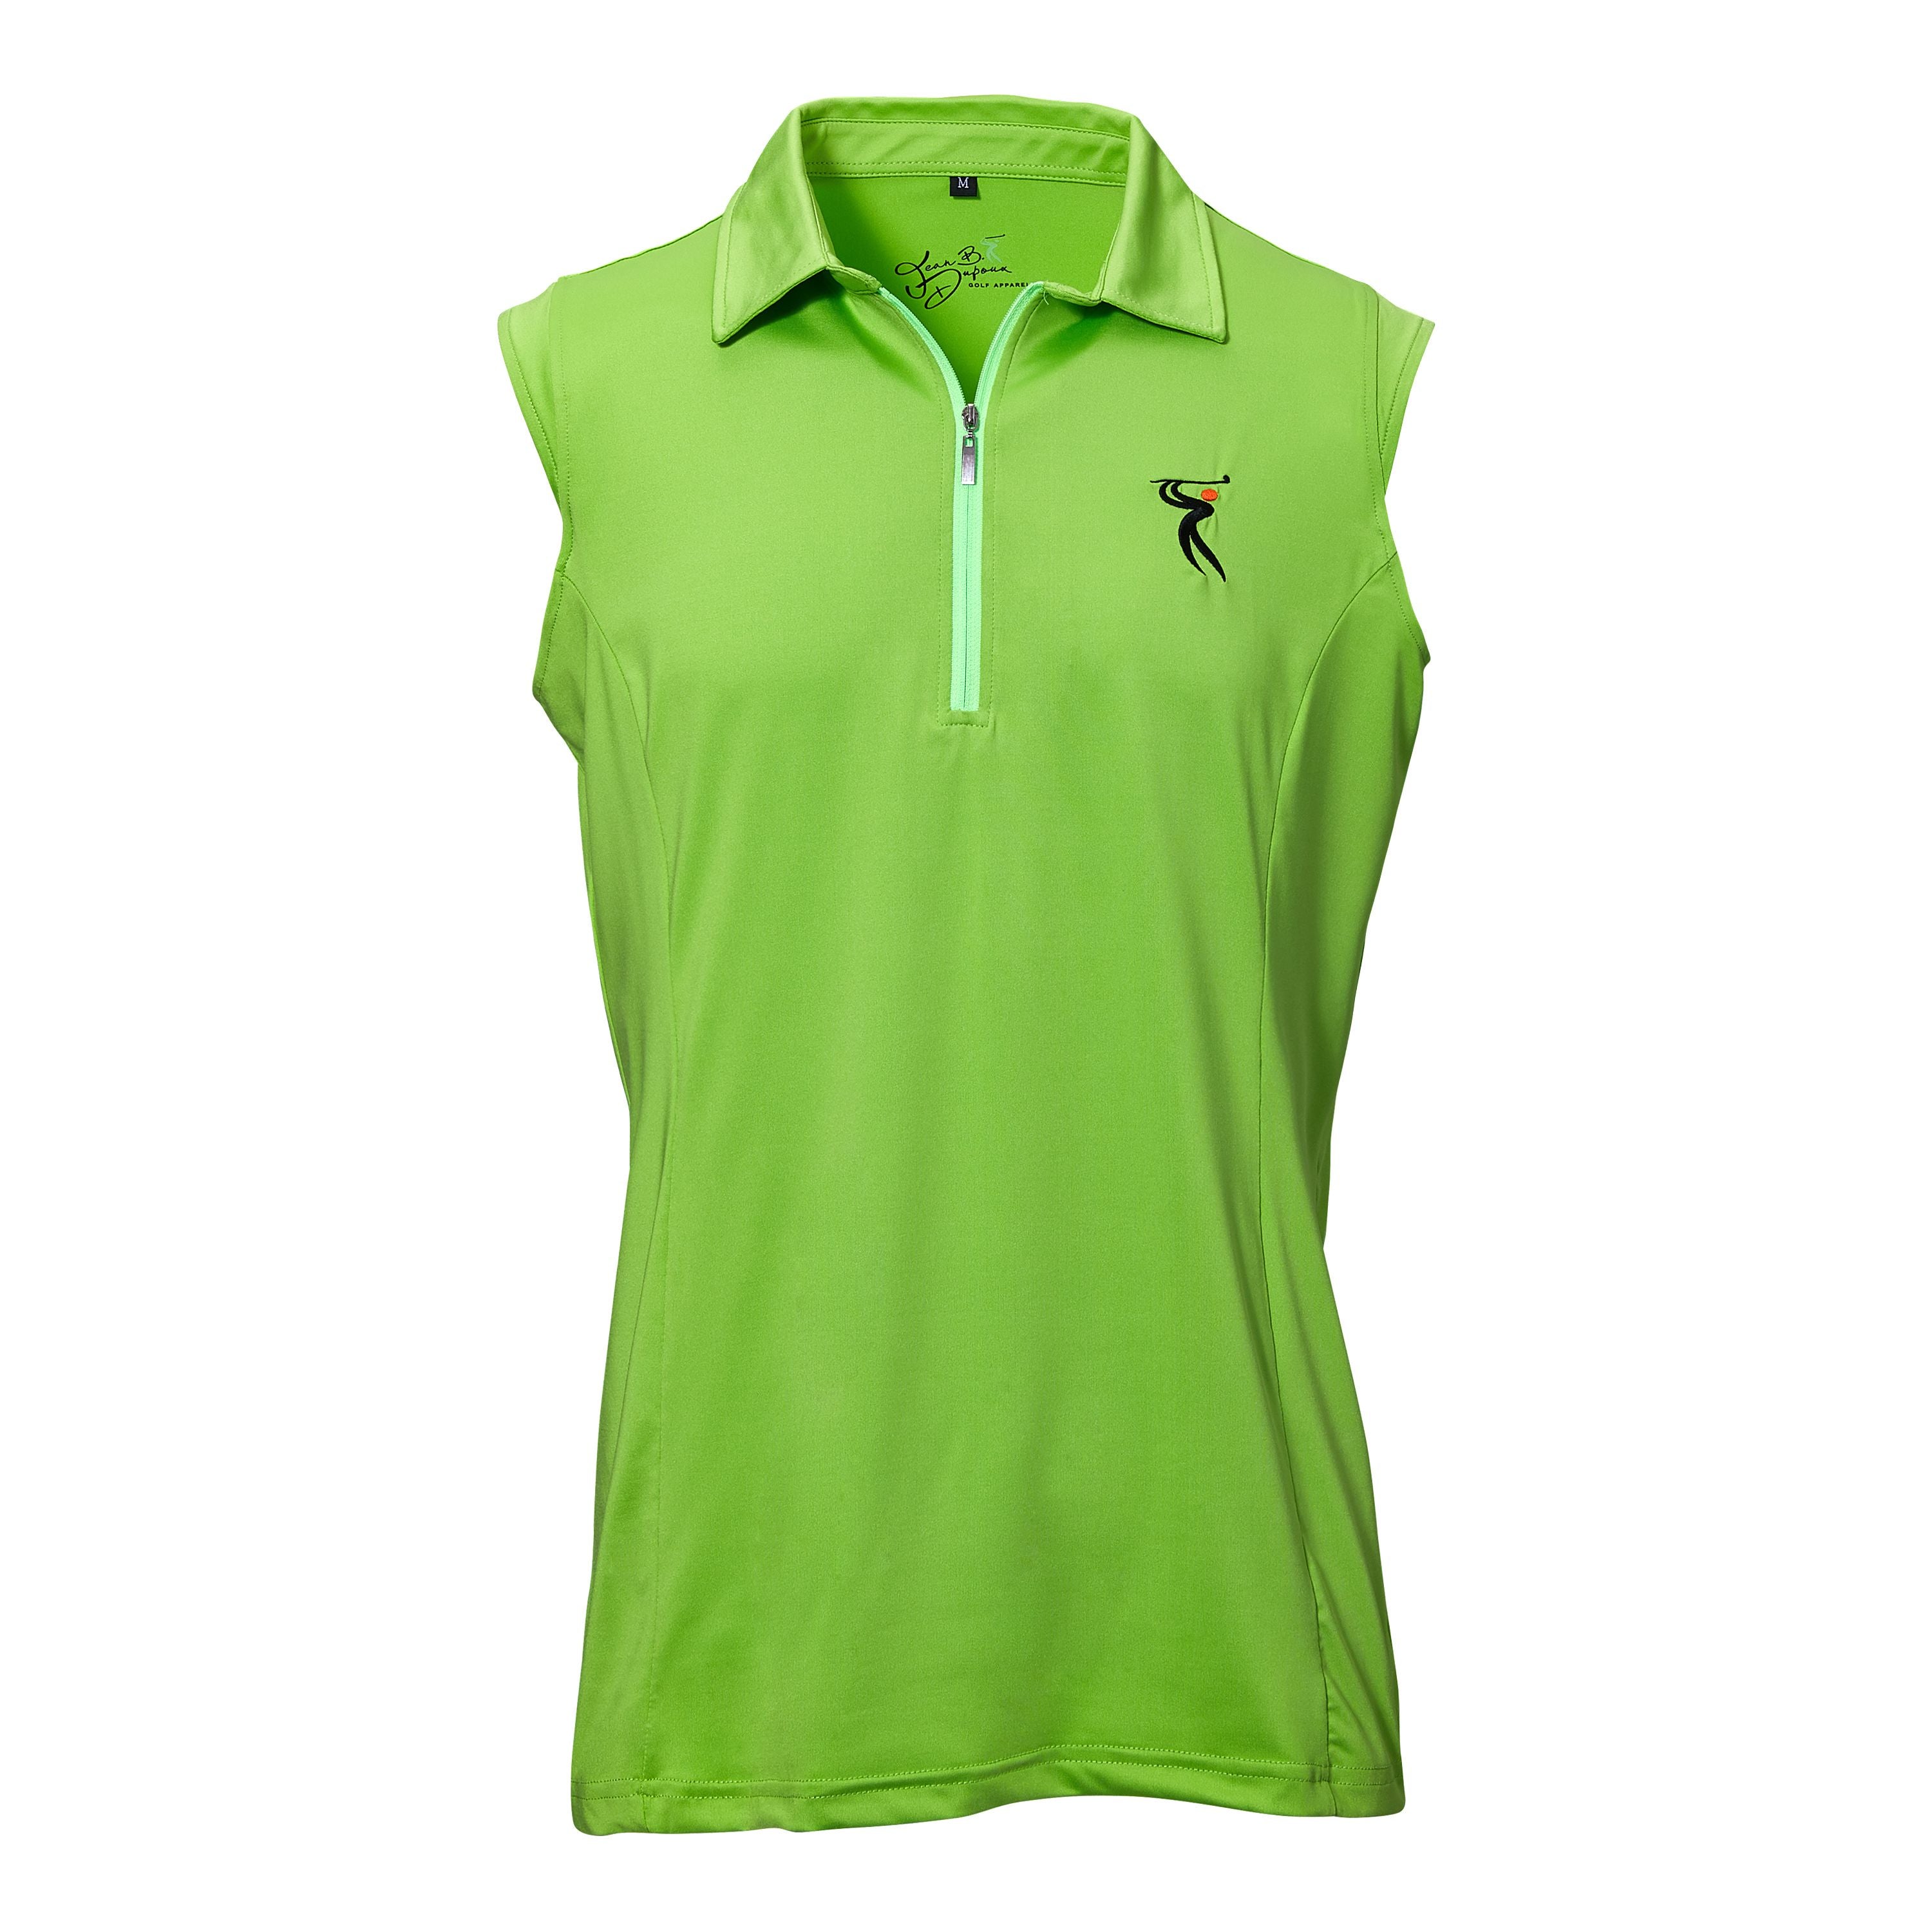 DRI FIT women's golf shirts 7014, 88% Polyester Dri fit, 12% spandex. - My Golf Shirts